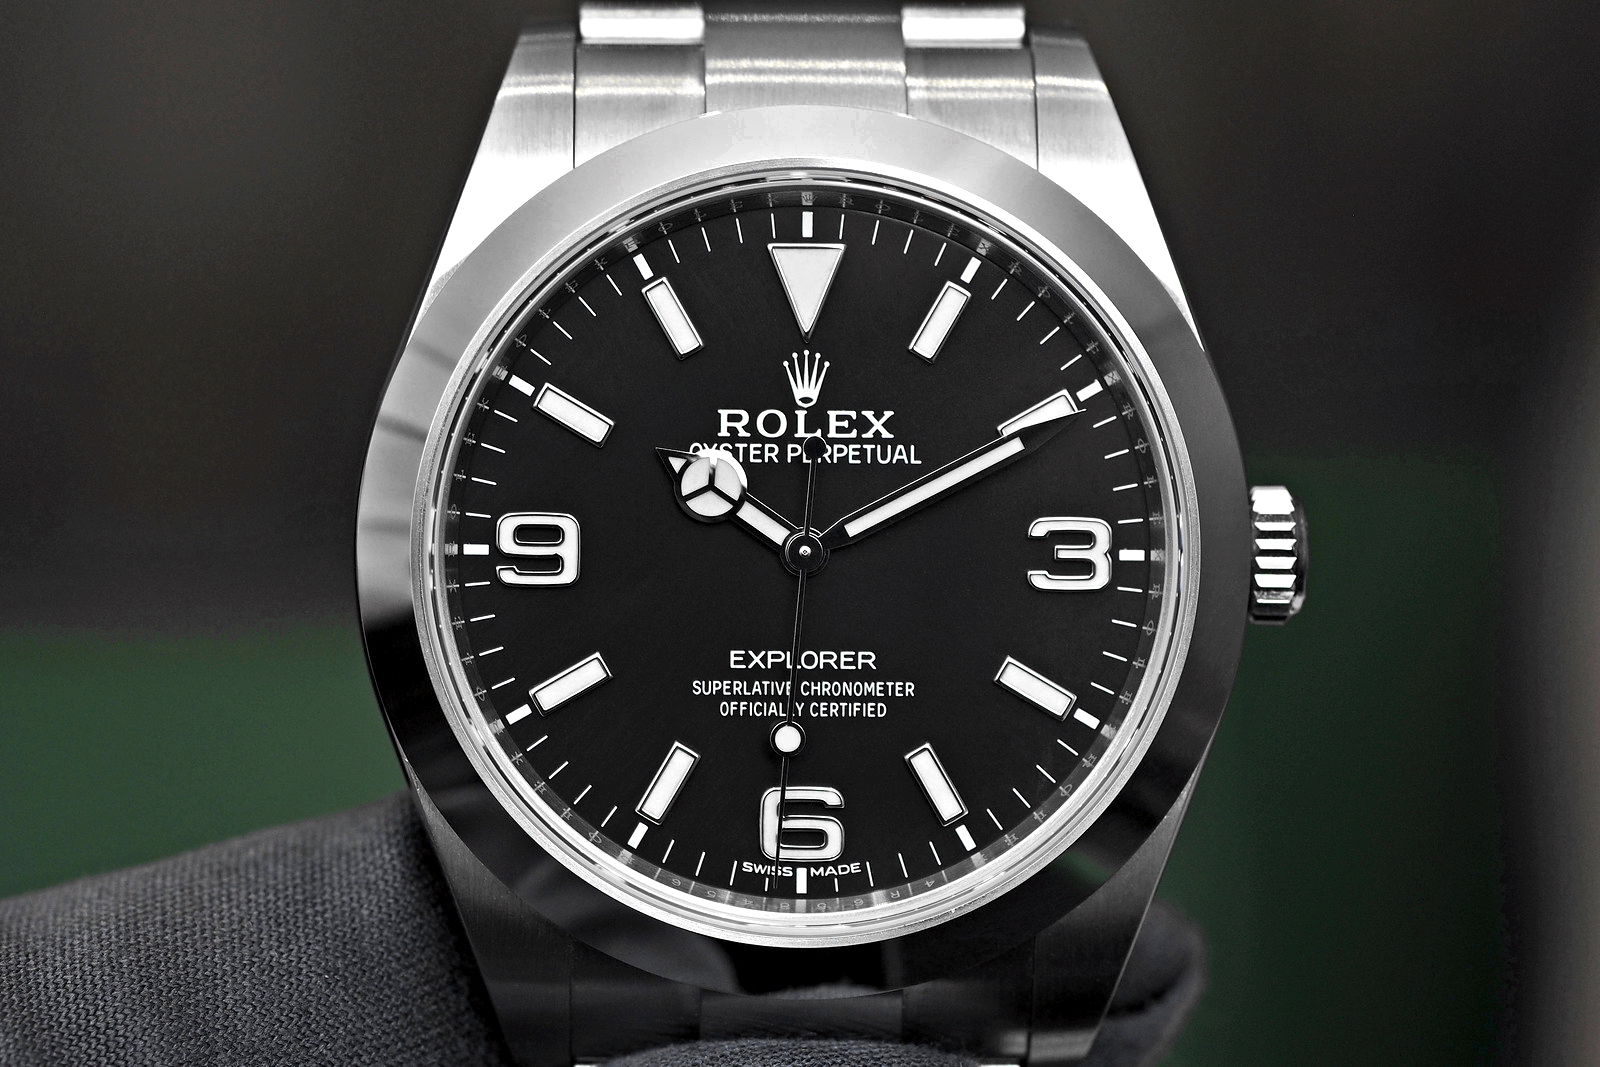 The new Rolex Explorer Hands-On